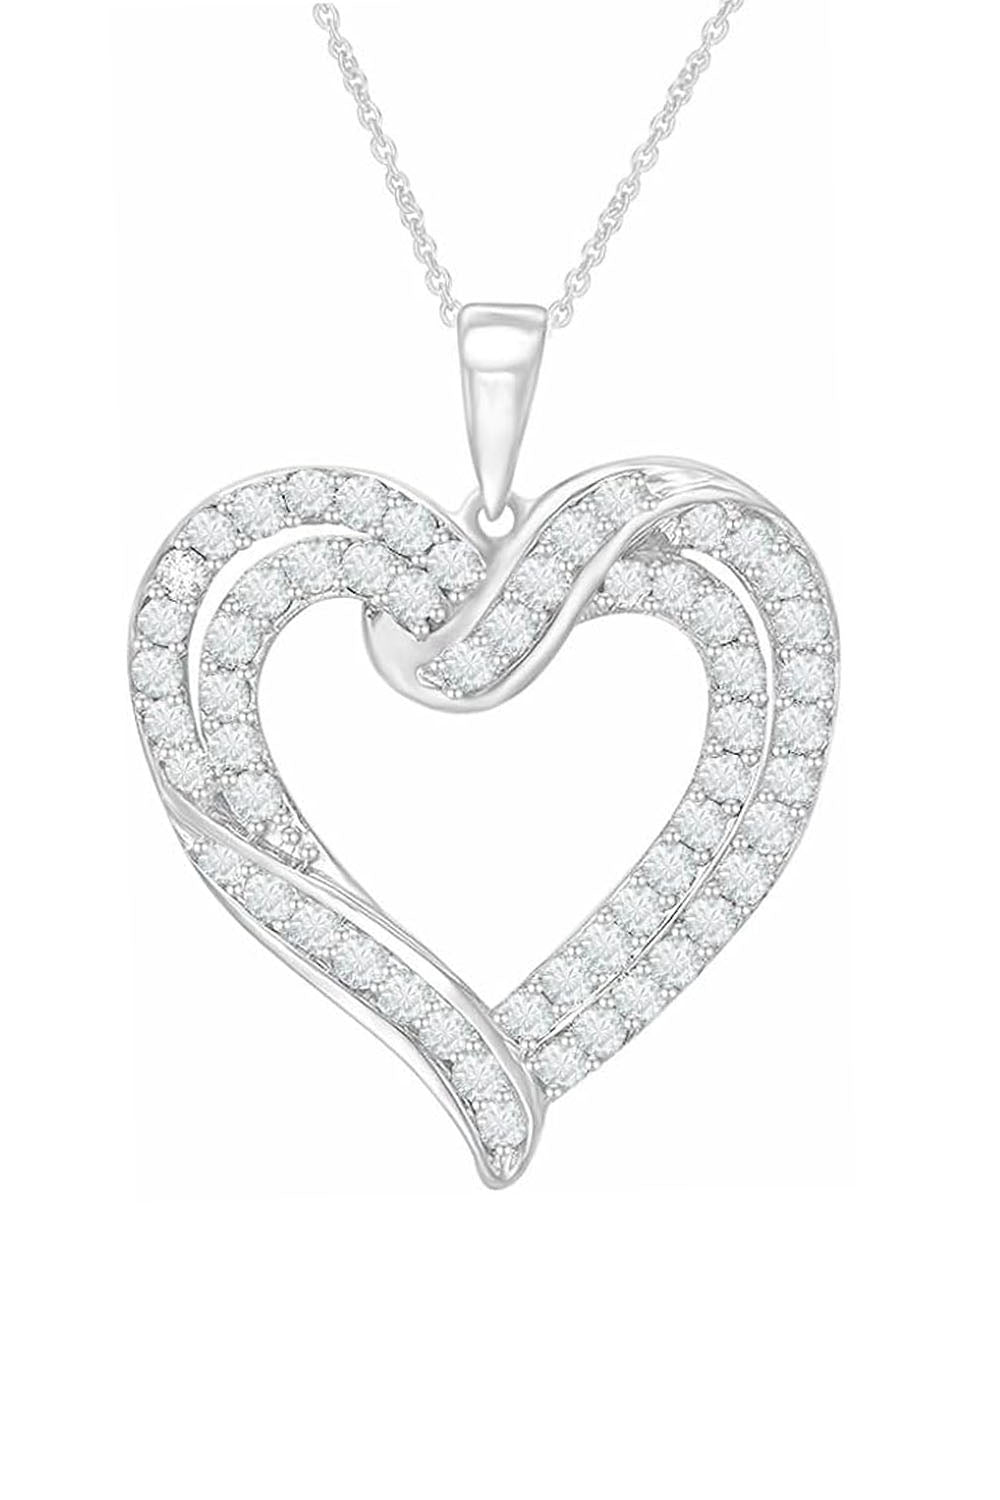 White Gold Color Round Cut Moissanite Love Heart Pendant Necklace